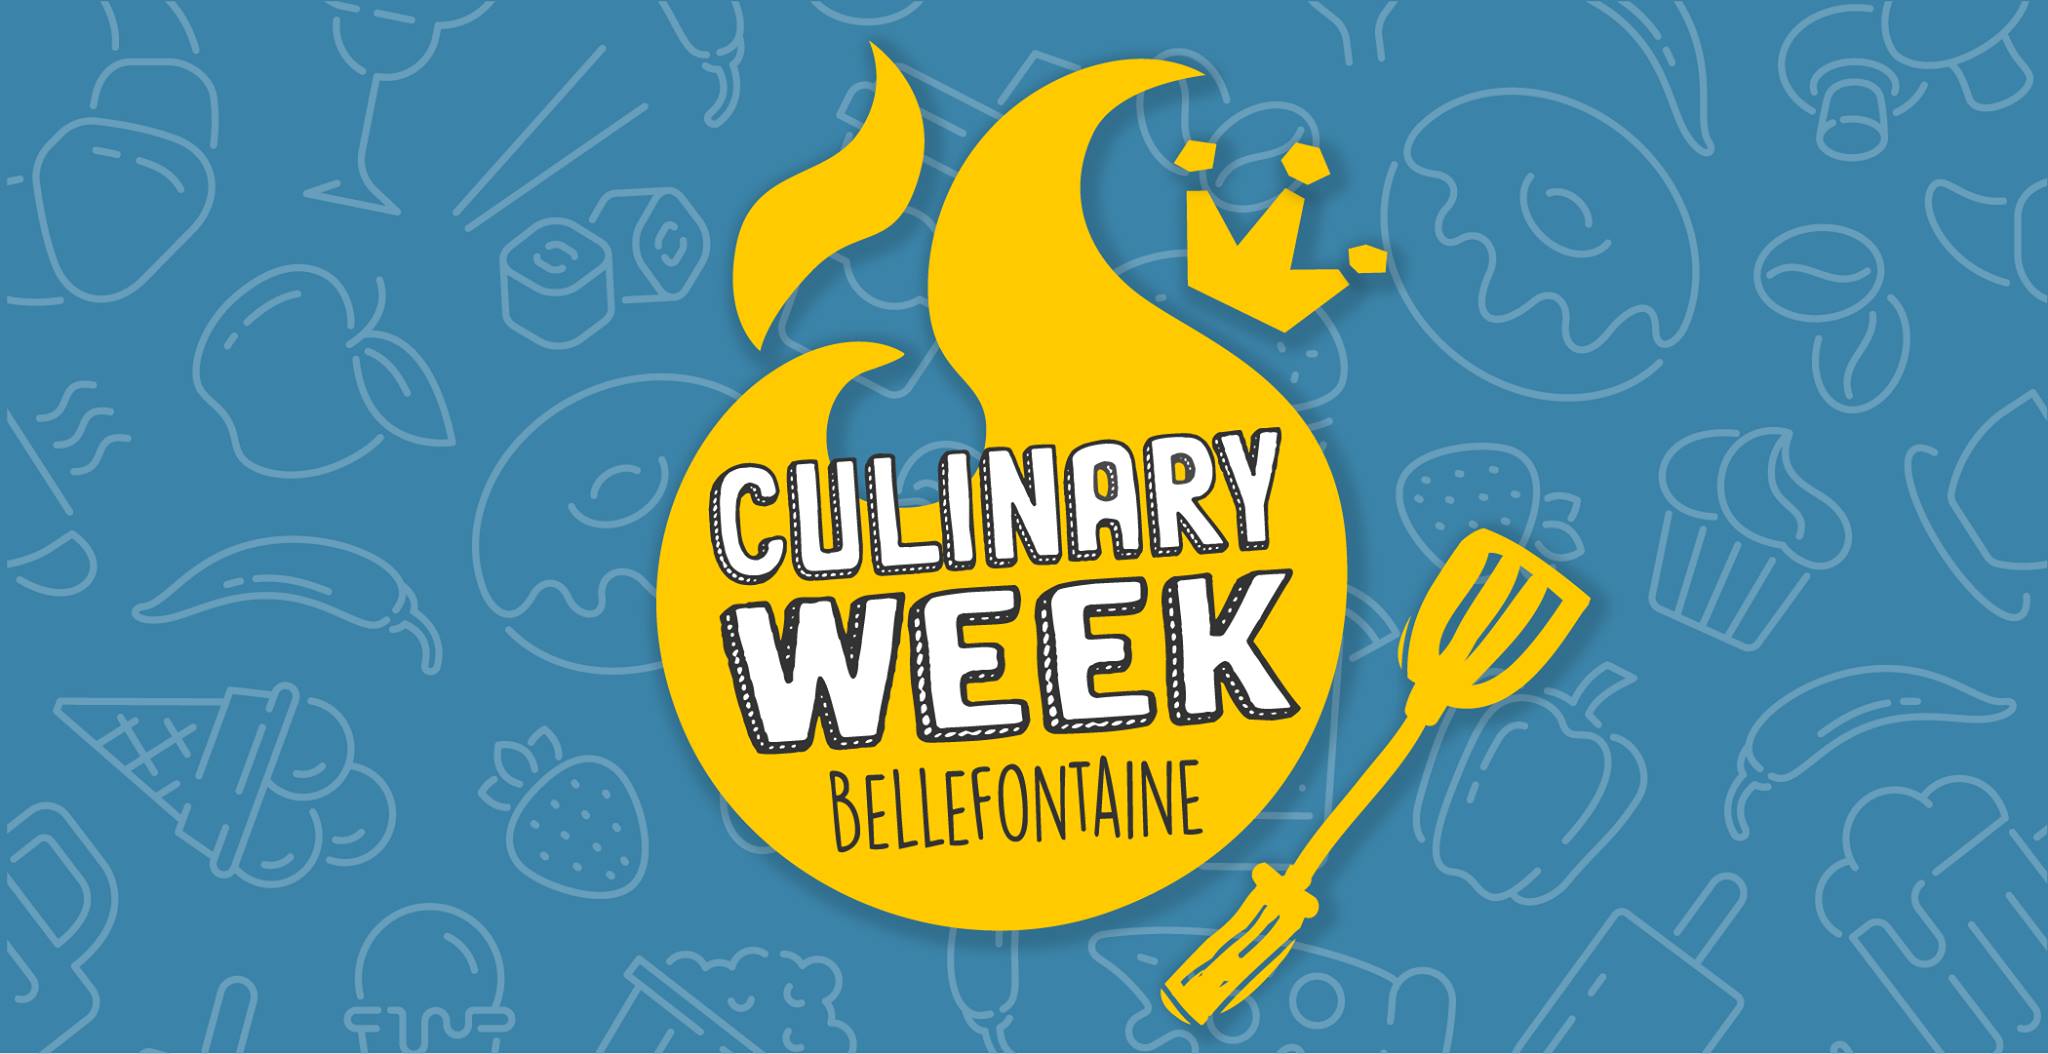 Bellefontaine Culinary Week